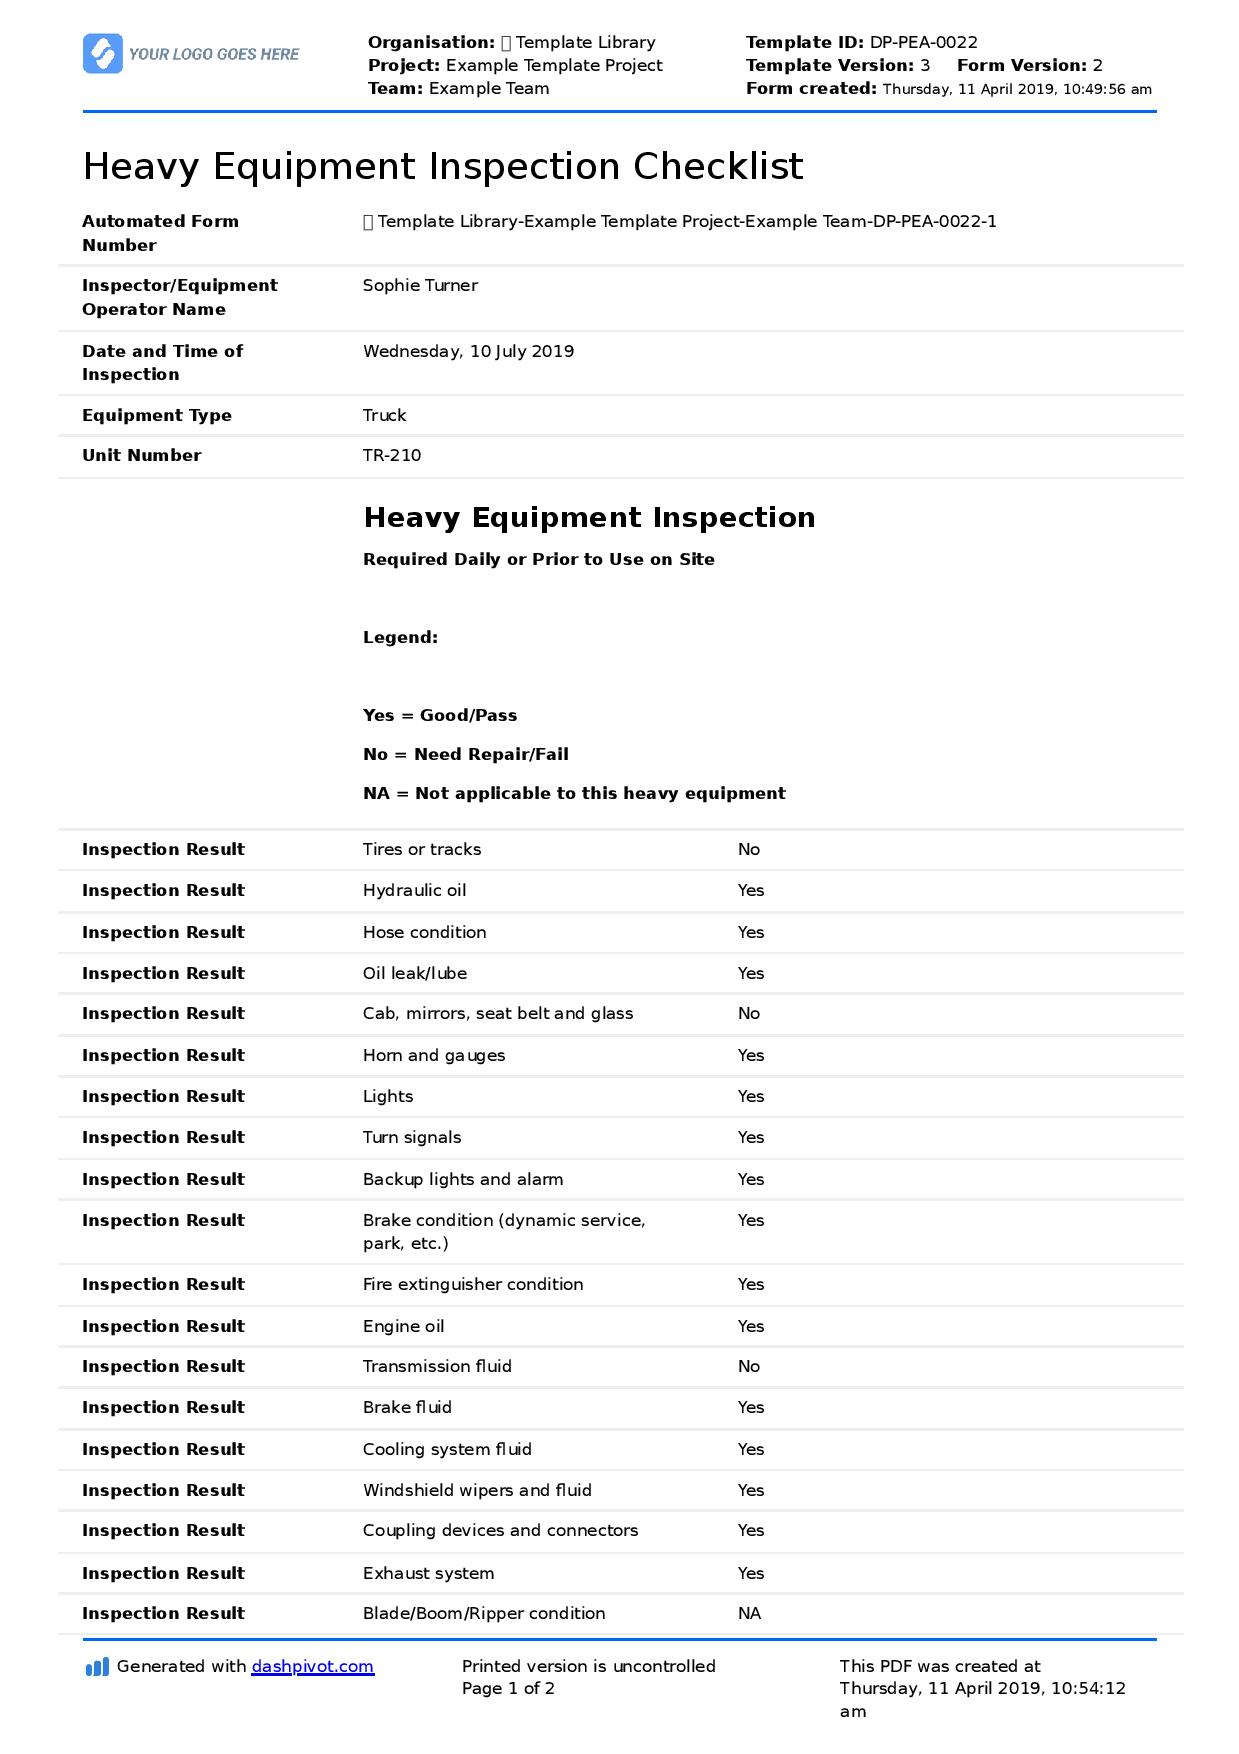 Heavy Equipment Inspection Checklist template (Free editable form) Regarding Equipment Inspection Checklist Template With Equipment Inspection Checklist Template